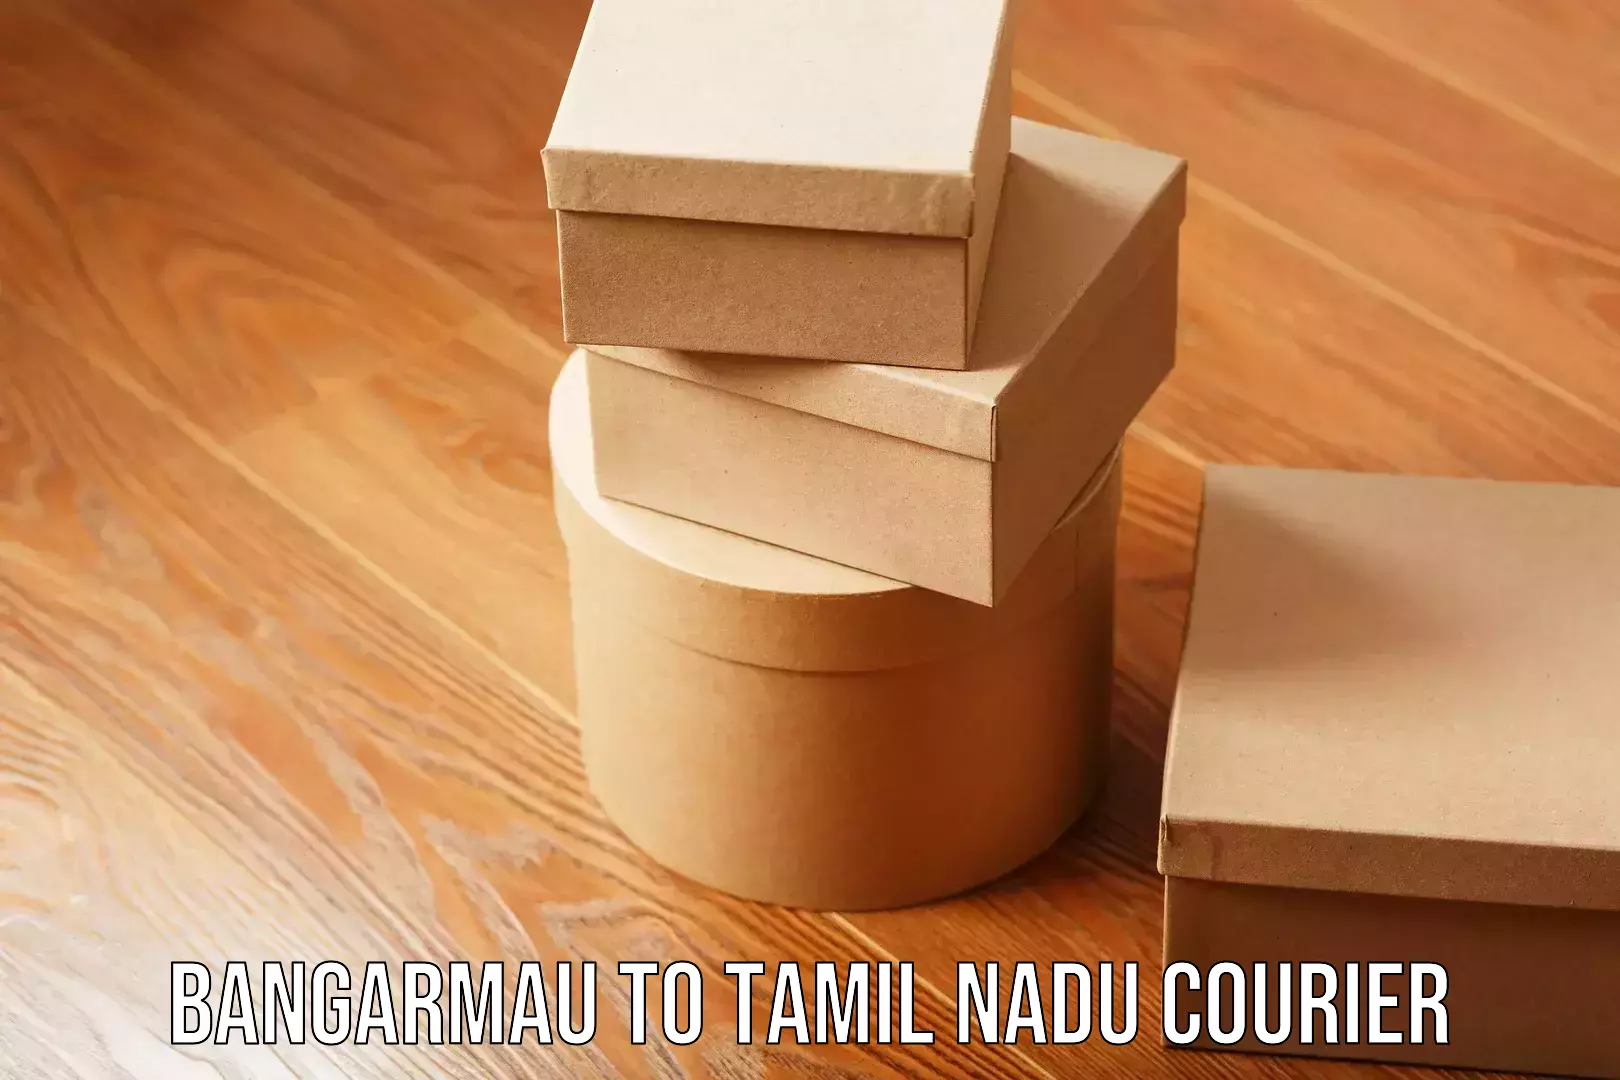 Enhanced tracking features Bangarmau to Tamil Nadu